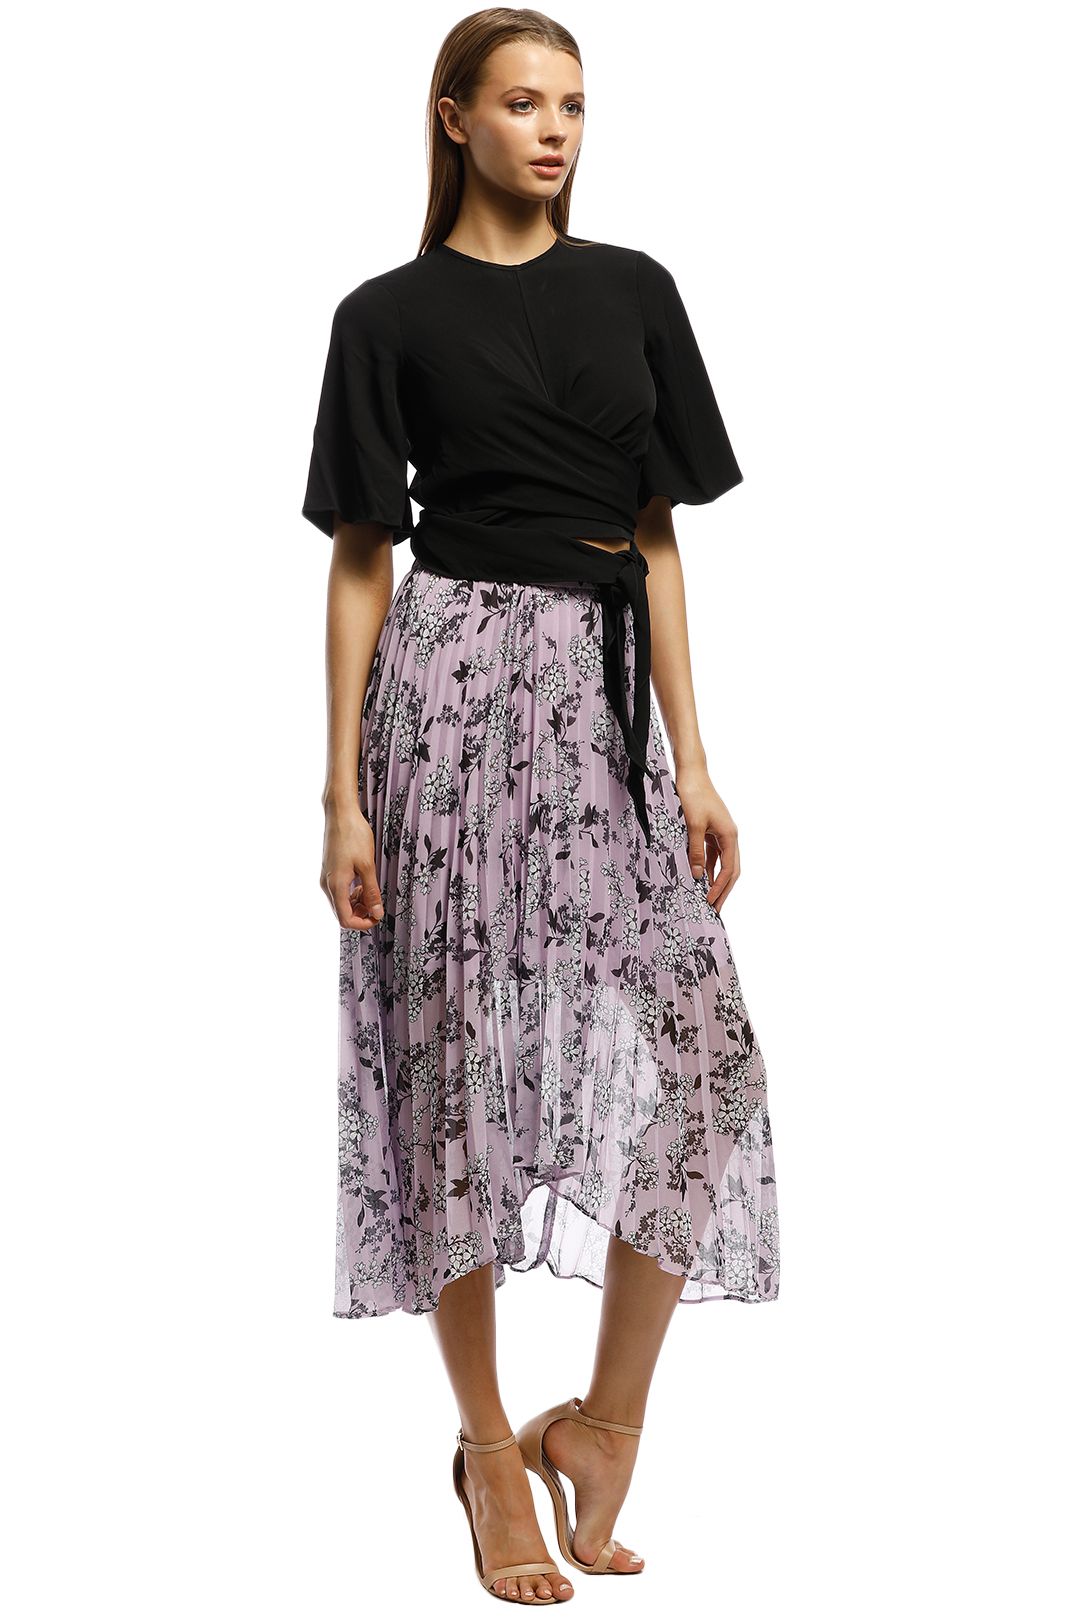 Keepsake The Label - Unique Skirt - Lilac Floral - Side